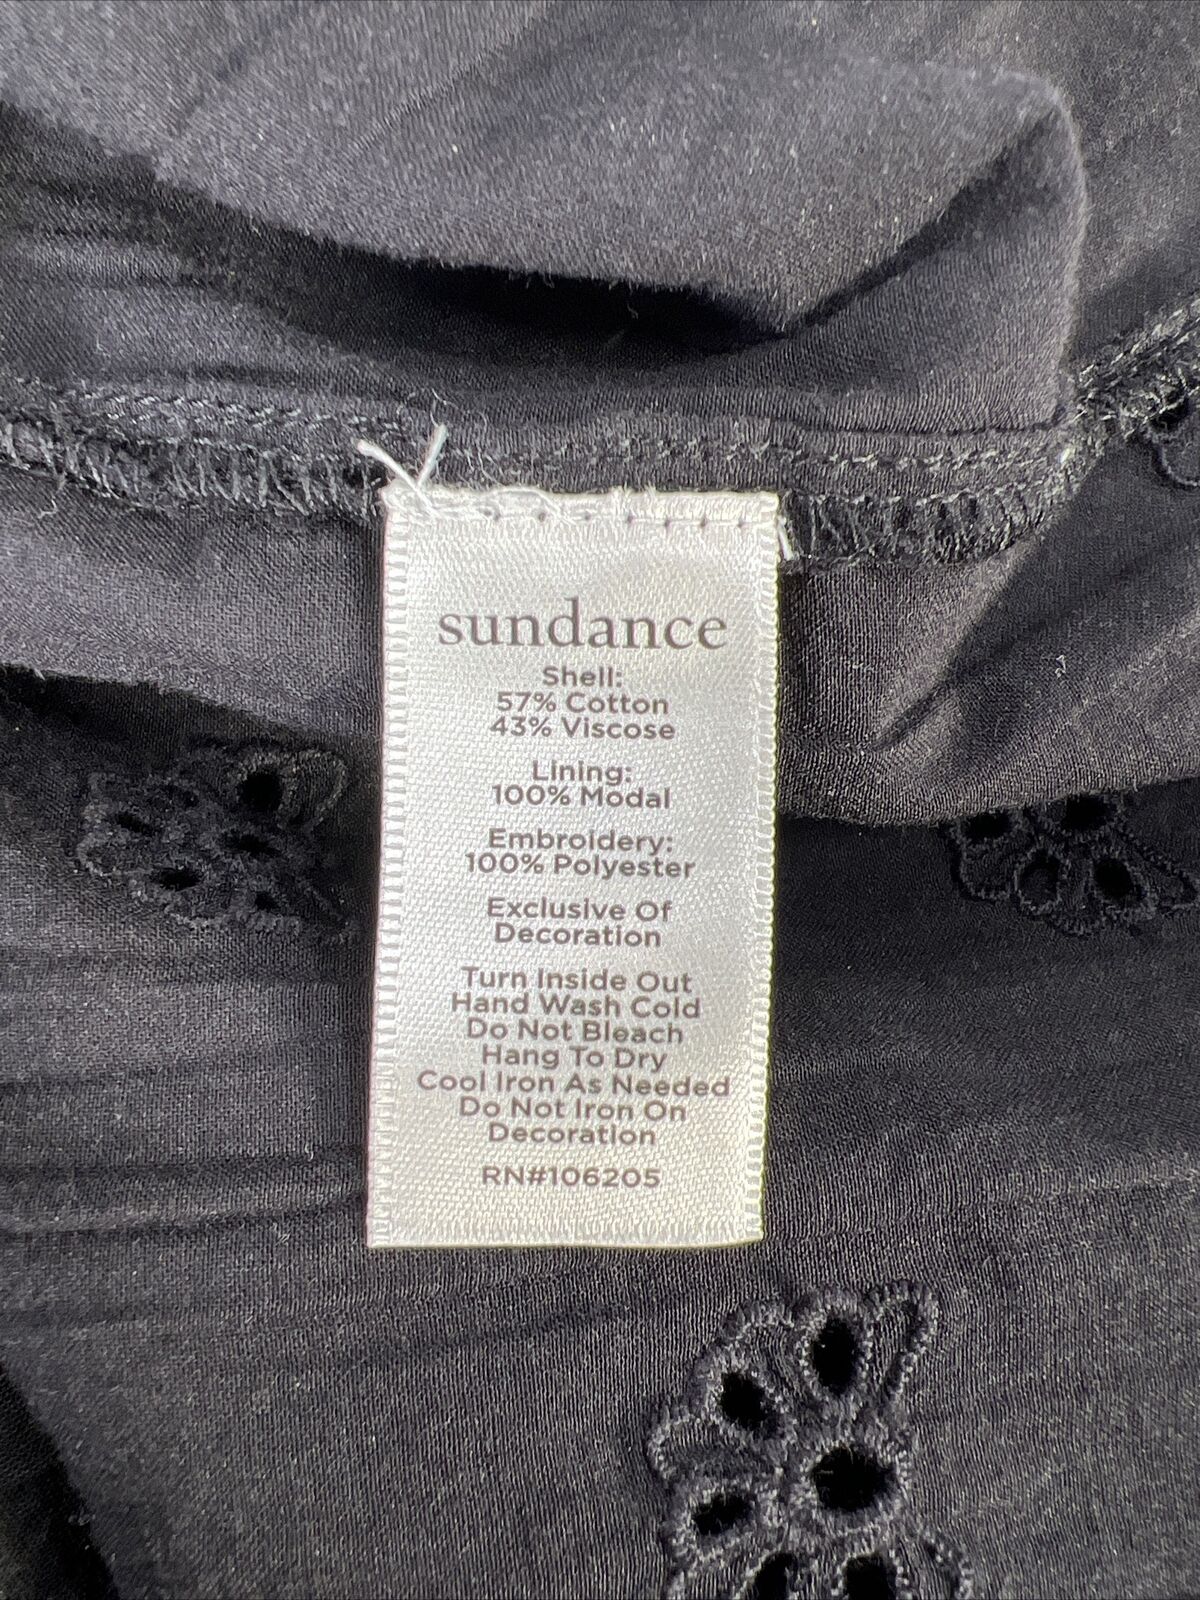 Sundance Women's Black Long Sleeve Embroidered Blouse - S